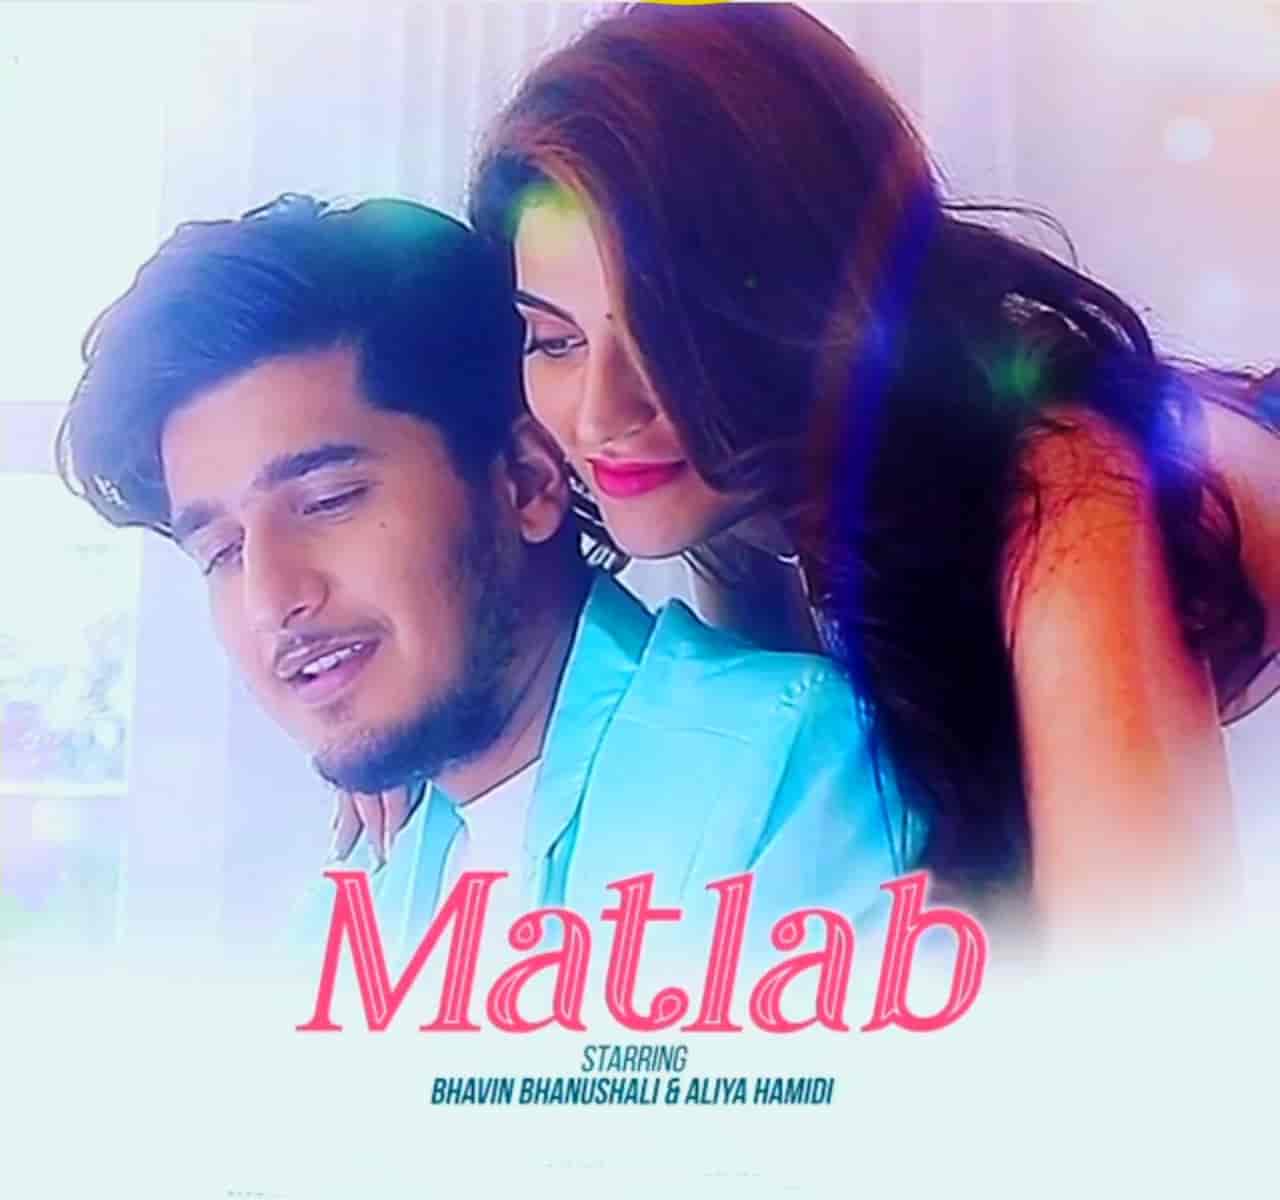 Matlab Nikal Gaya Toh Hindi Song Image Features Bhavin Bhanushali and Aliya Hamidi